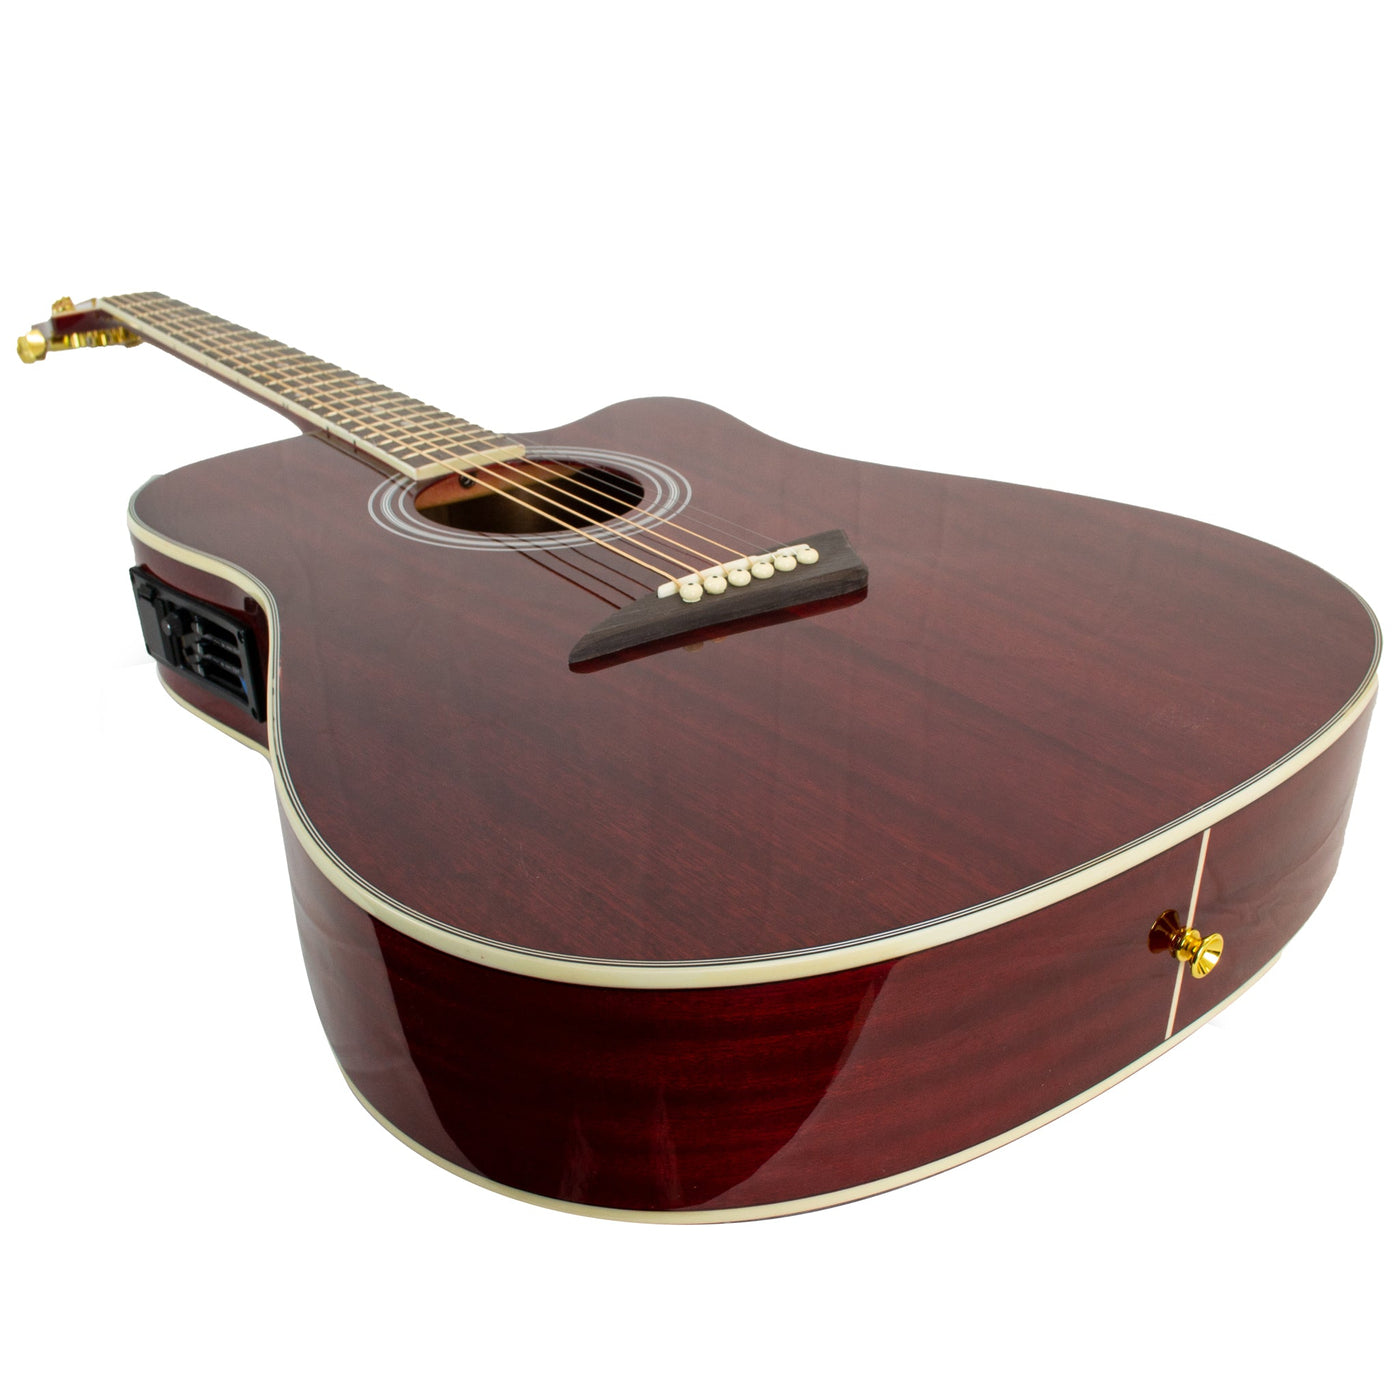 Kona K2 Series K2TRD Thin Body Acoustic/Electric Guitar - Red